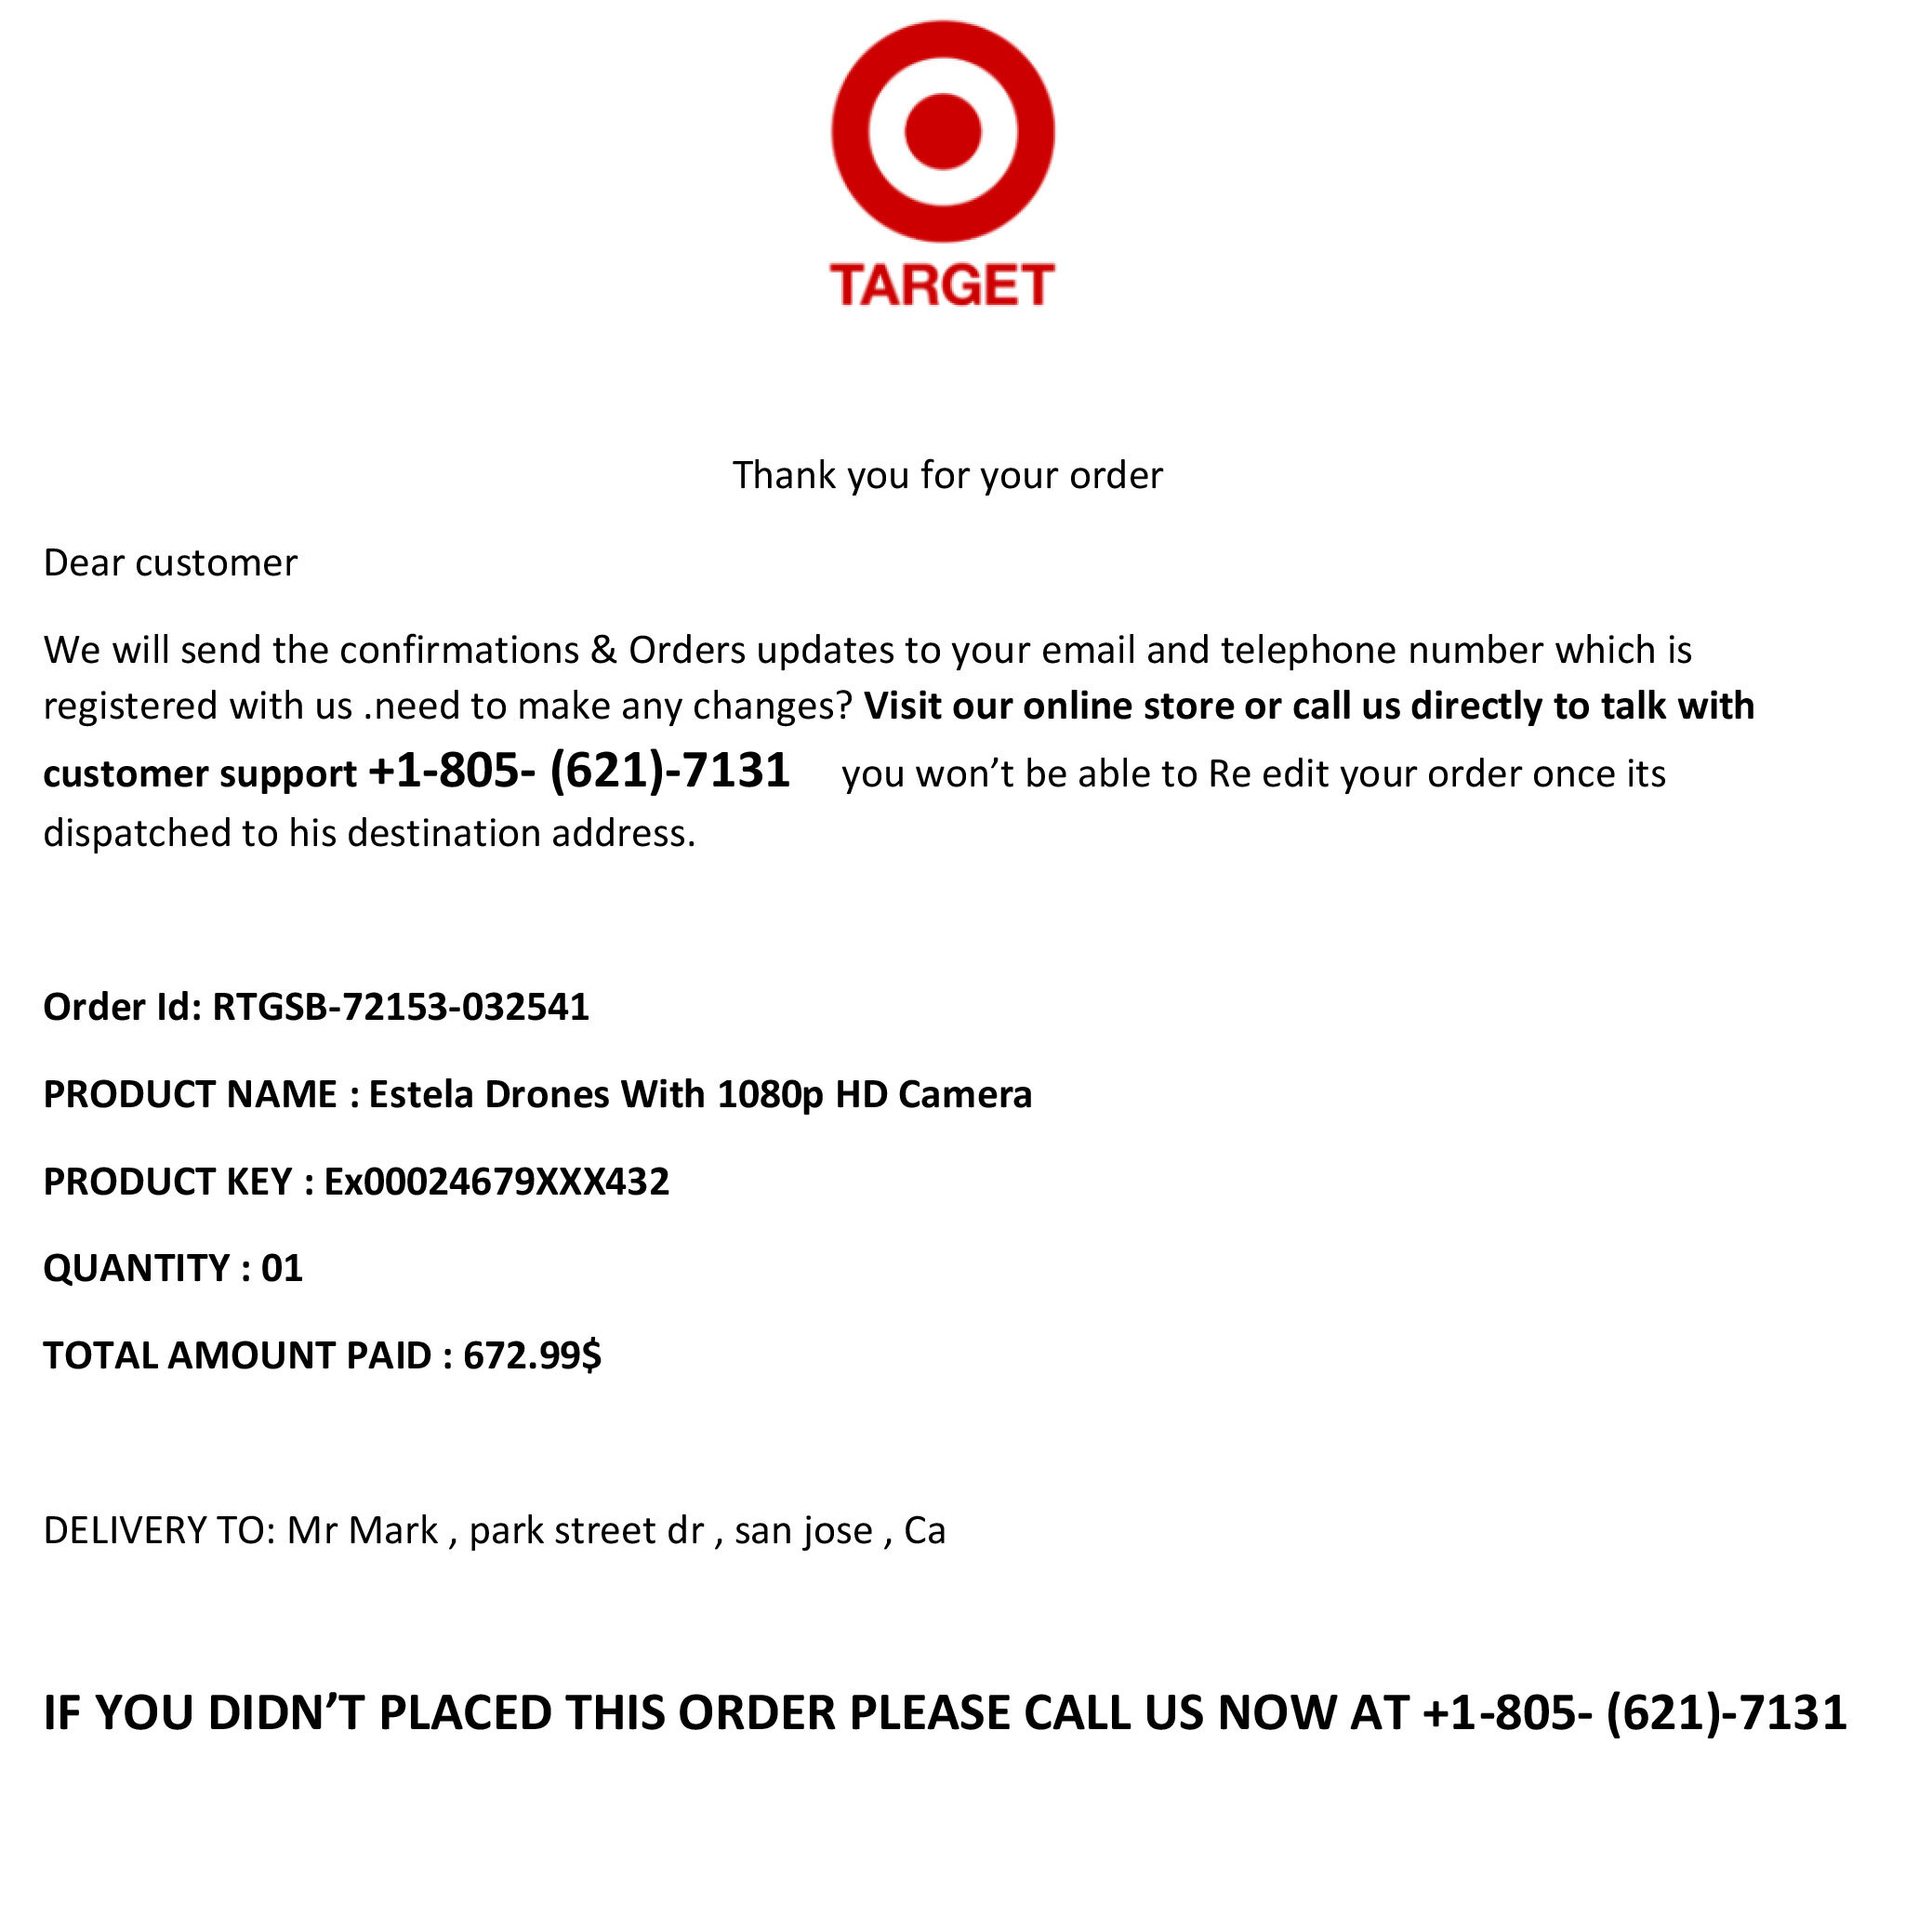 A fraudulent Target order confirmation.